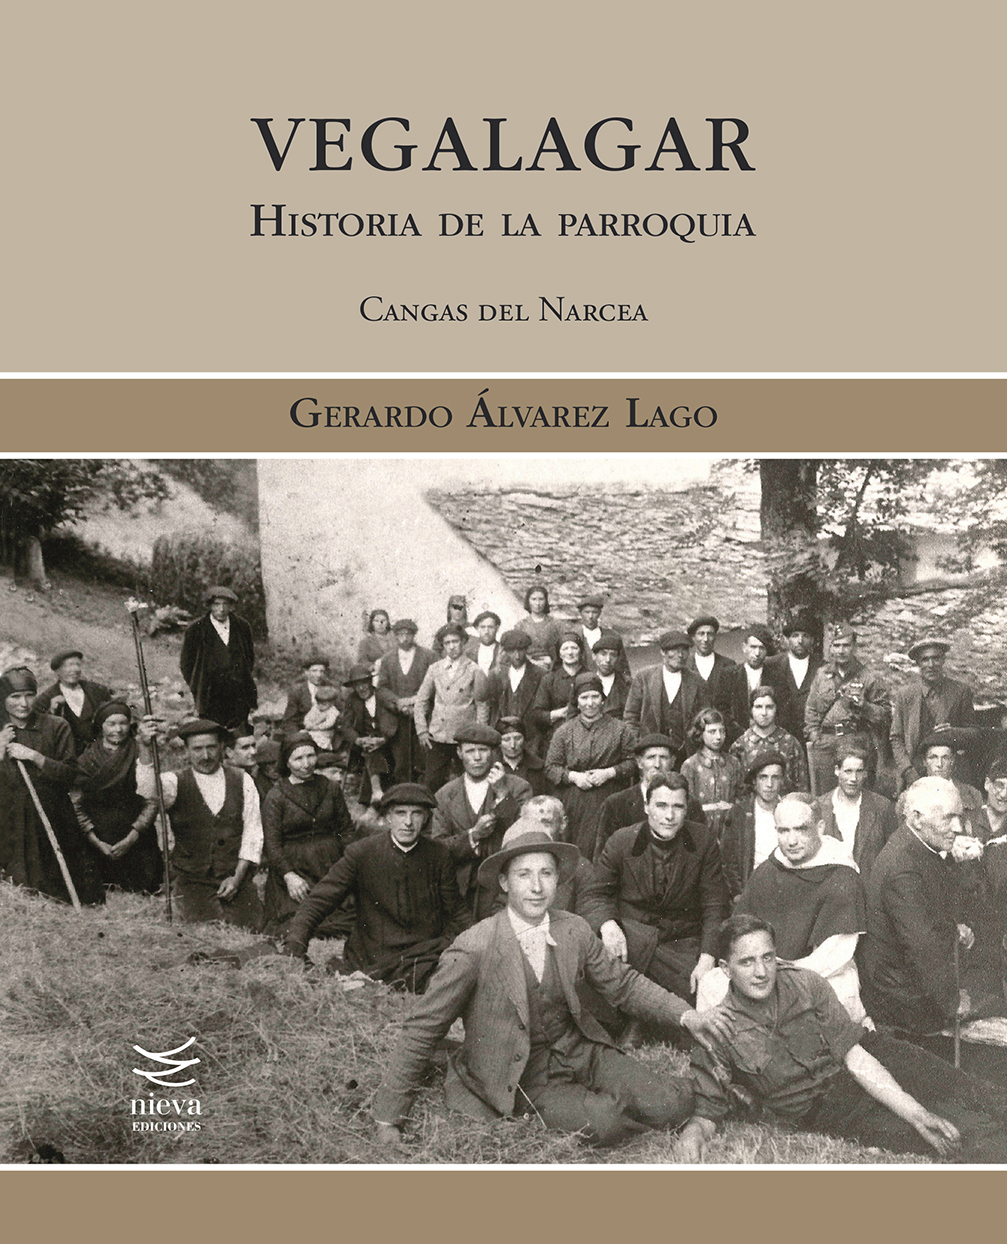 CANGAS DEL NARCEA.- Presentación del libro Vegalagar. Historia de la parroquia